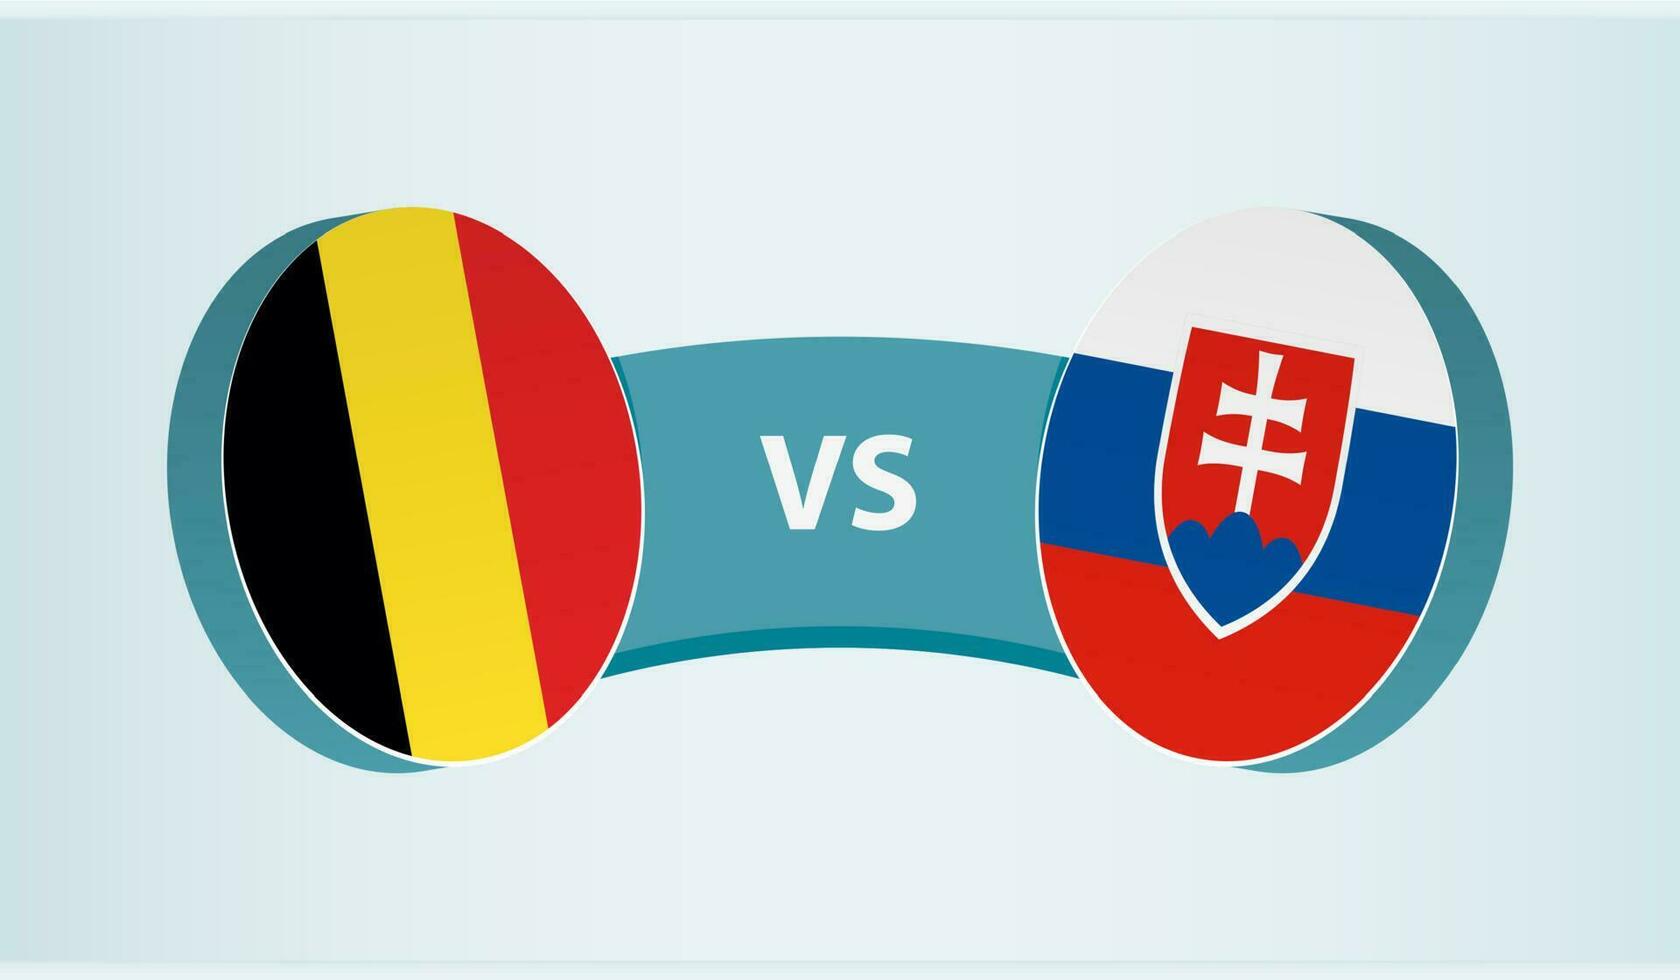 Belgium versus Slovakia, team sports competition concept. vector